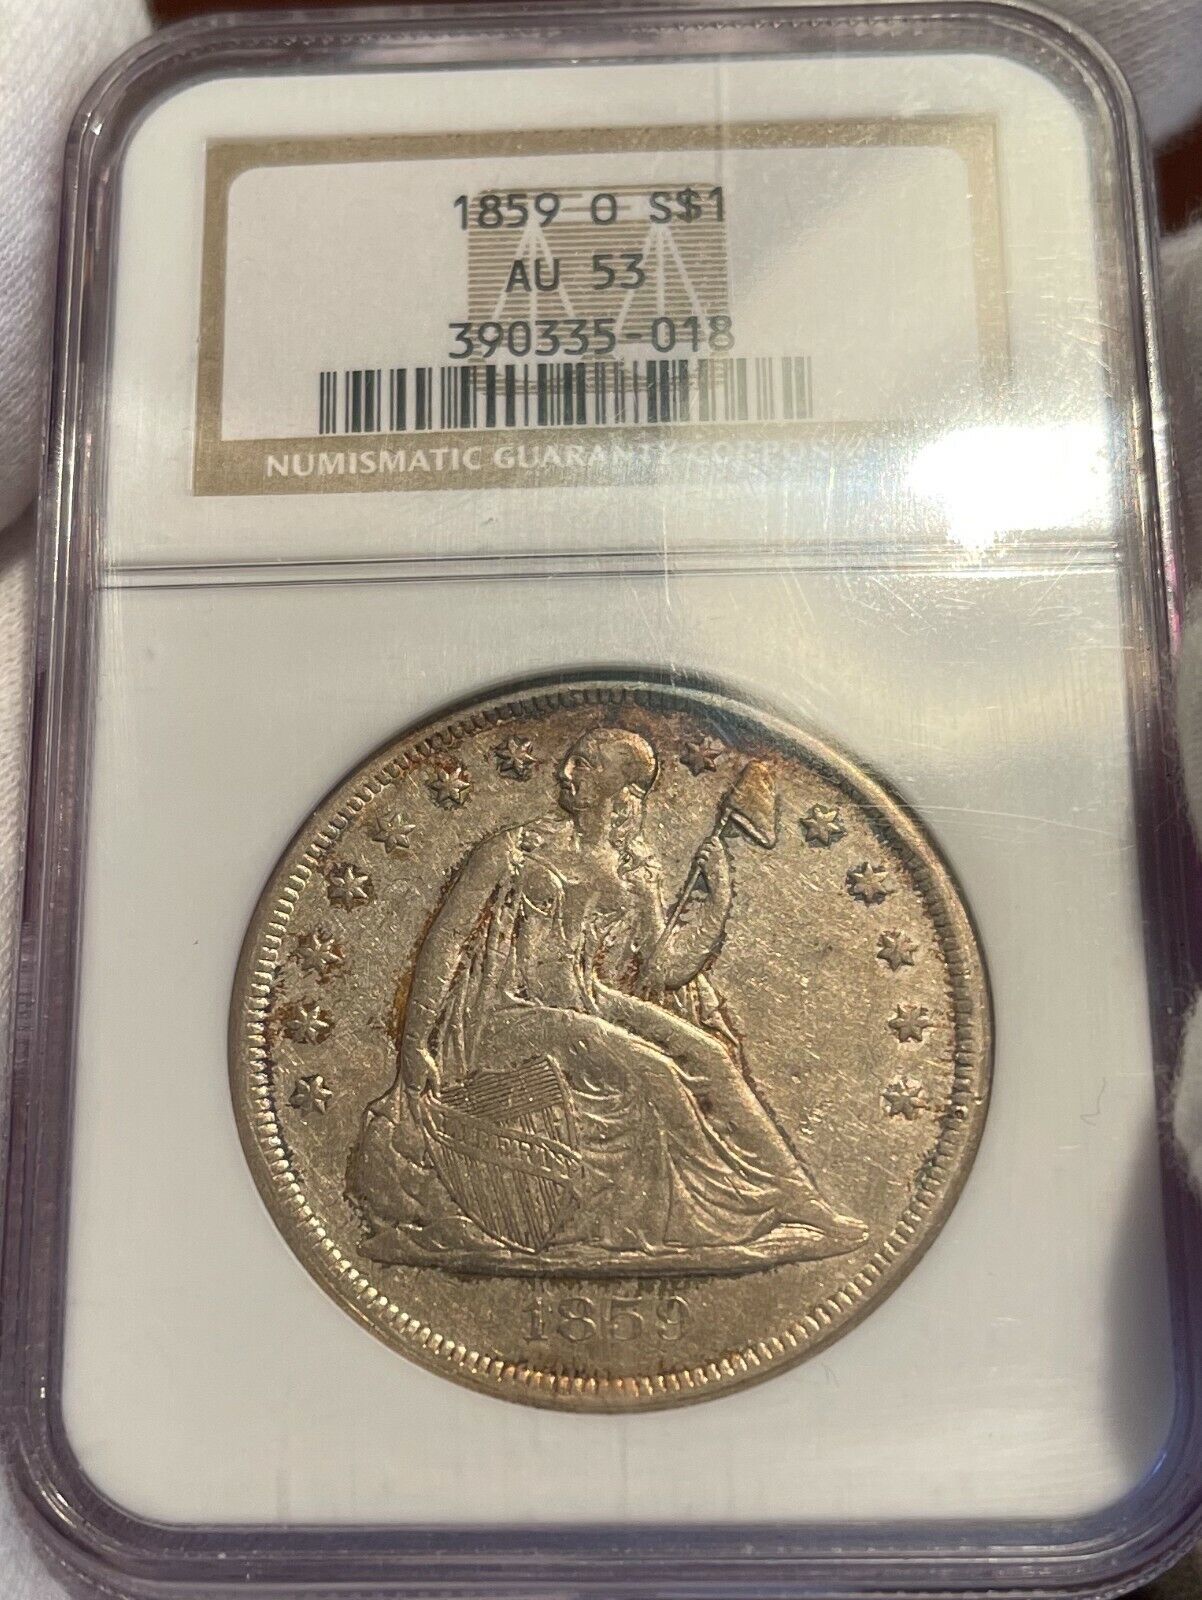 1859-O Seated Liberty Silver Dollar - NGC AU53 - Nice Higher Grade Original!